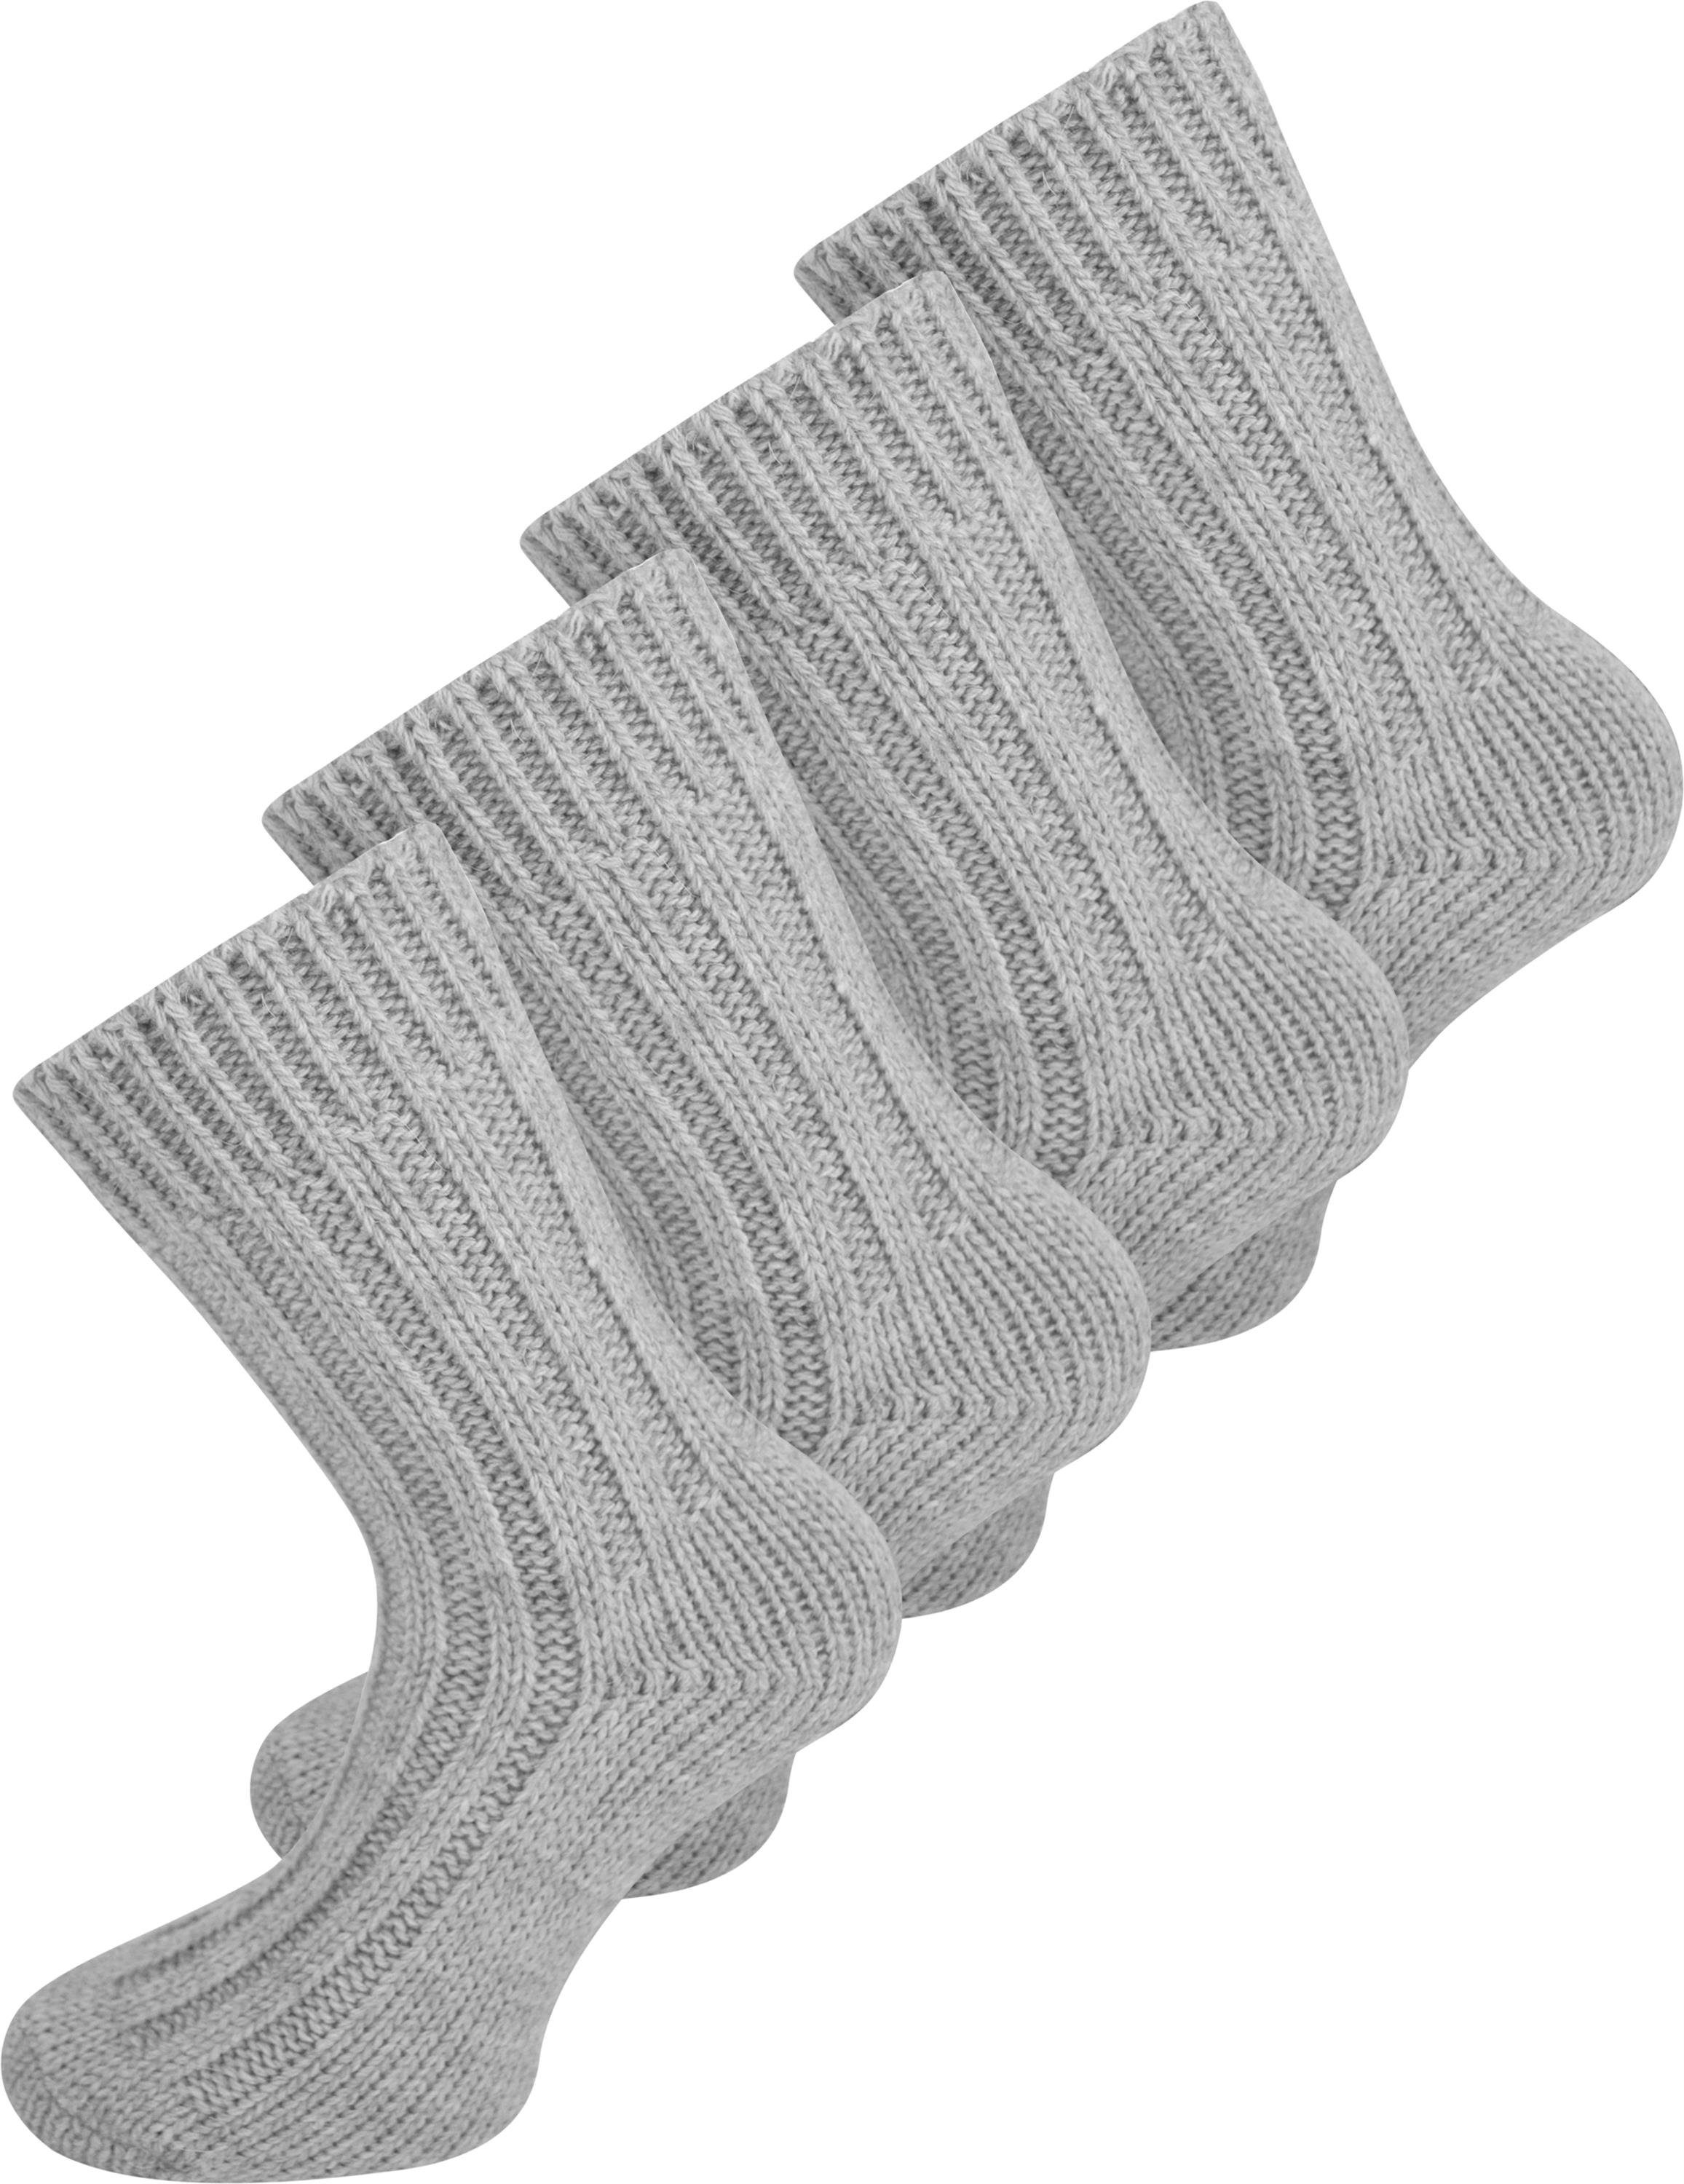 normani Thermosocken 4 Paar Alpaka-Socken (4 Paar) hochwertige Alpaka-Wolle Hellgrau